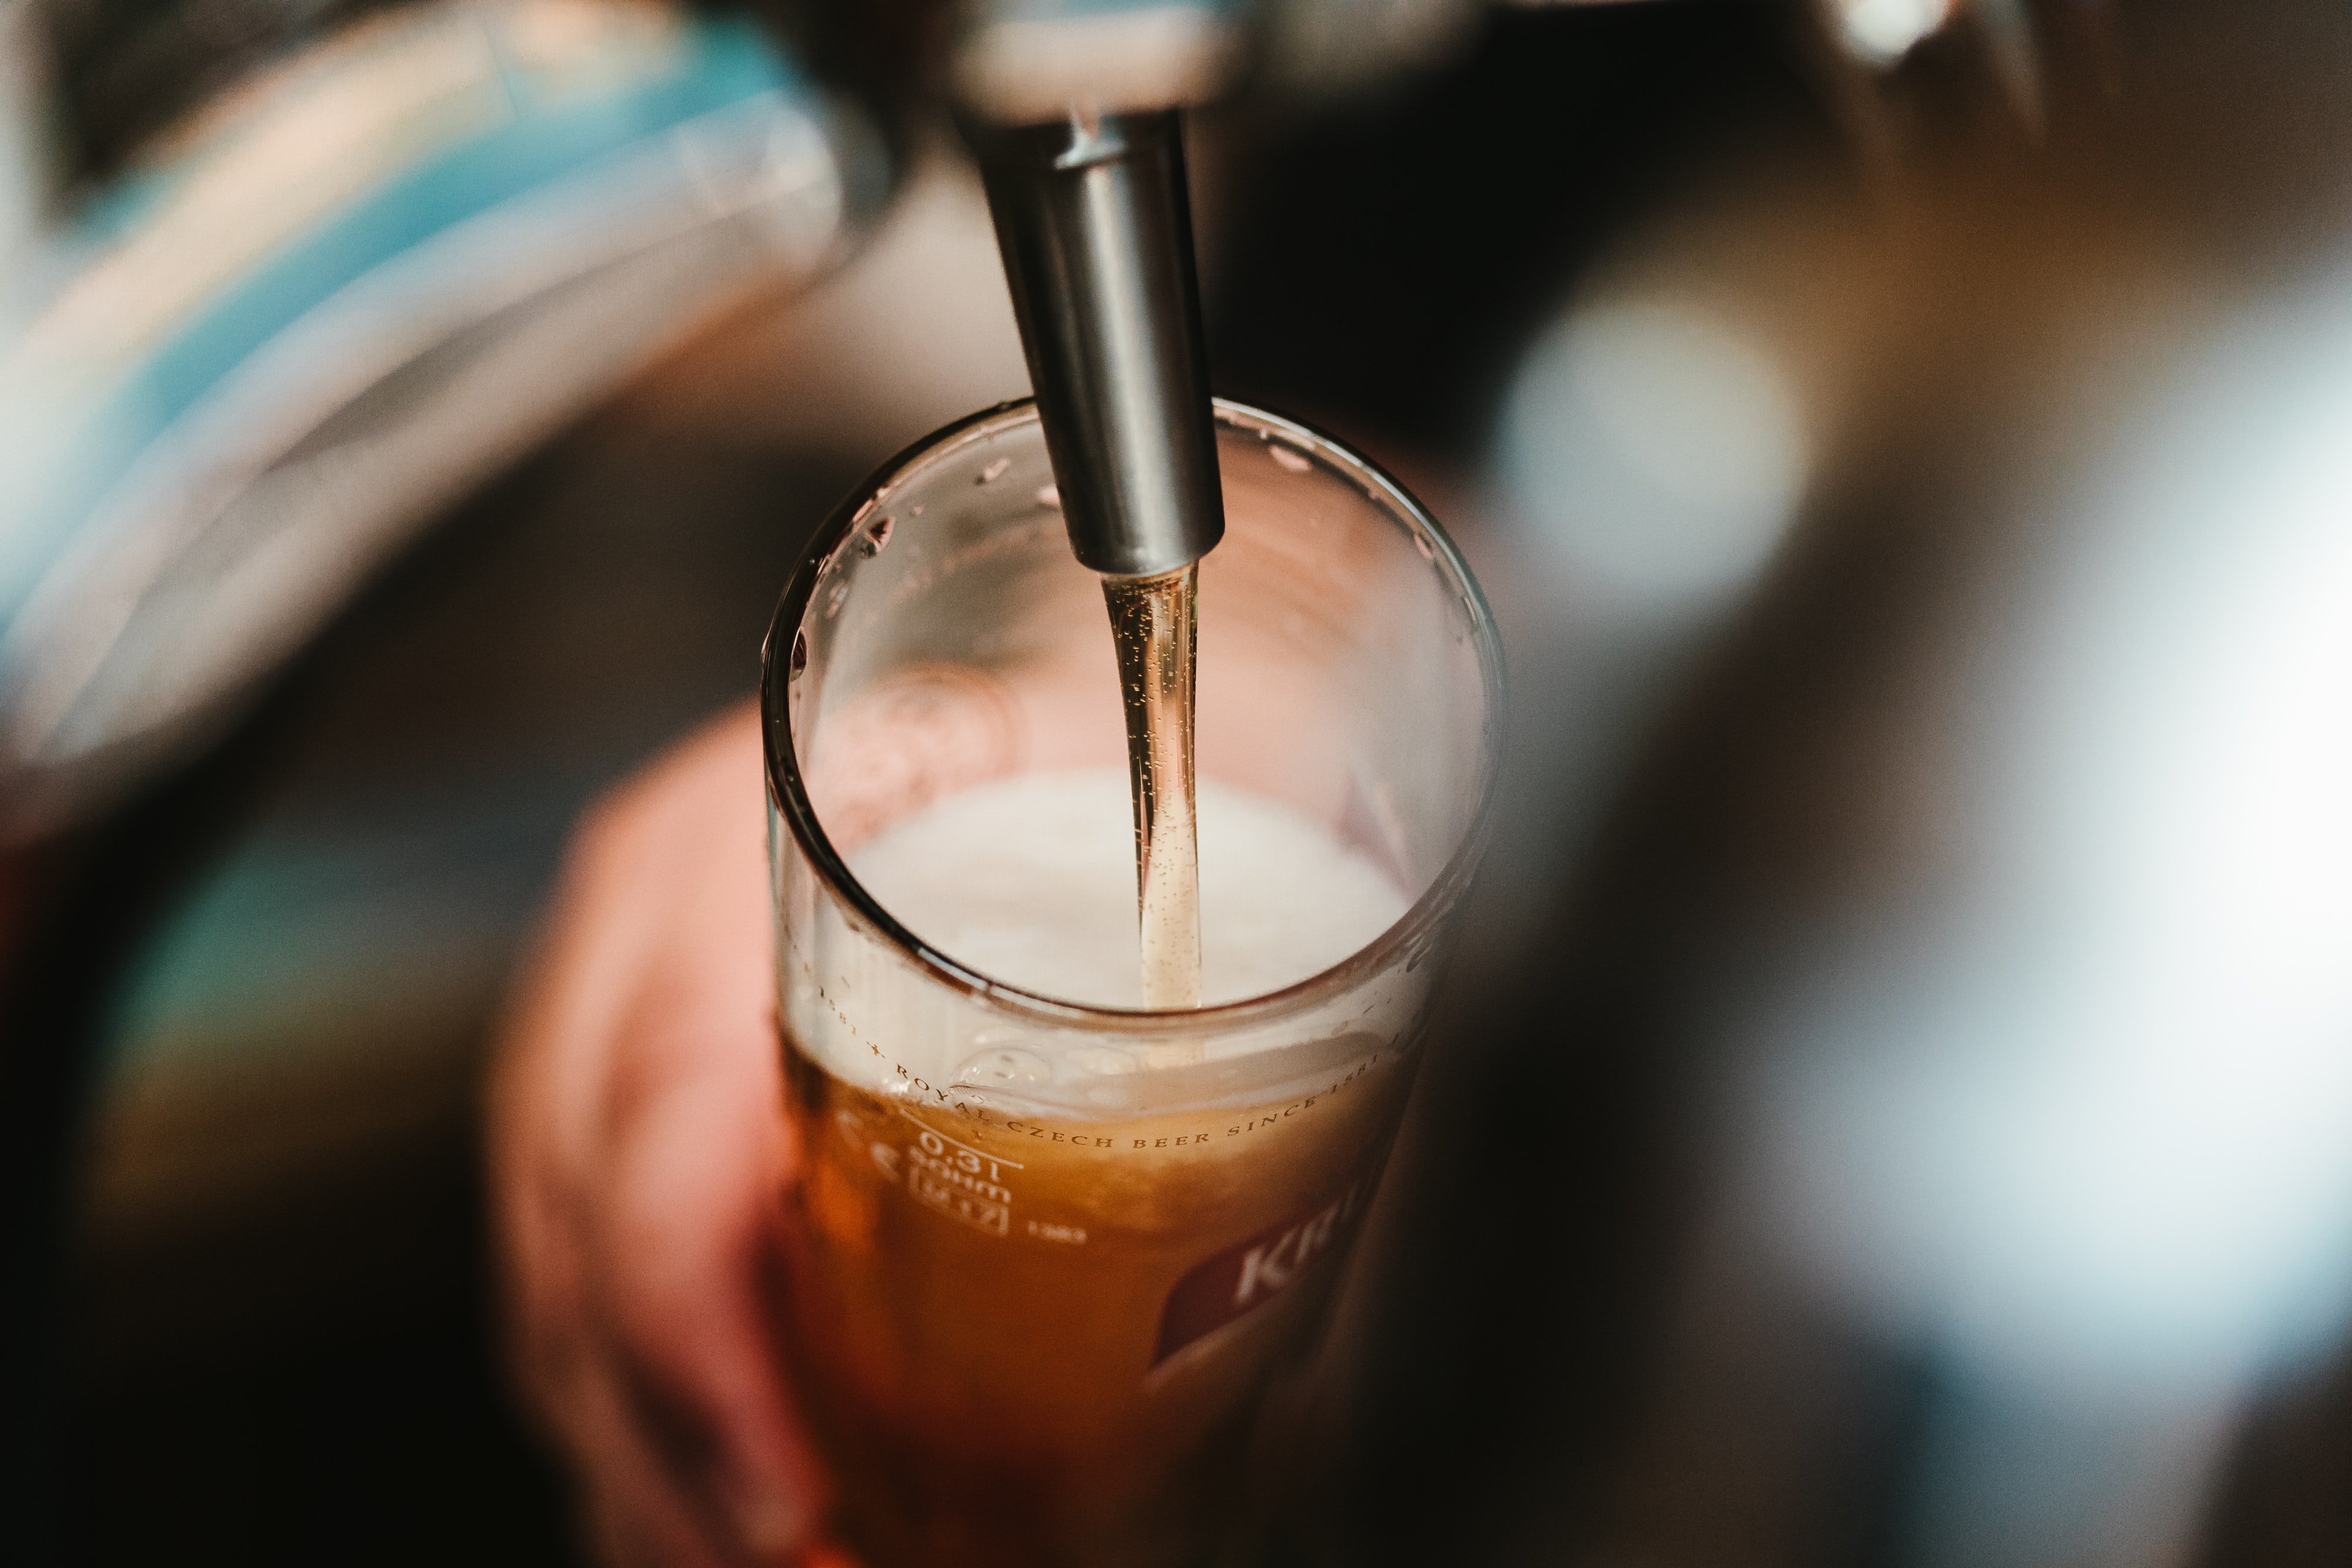 Servint una cervesa : Unsplash